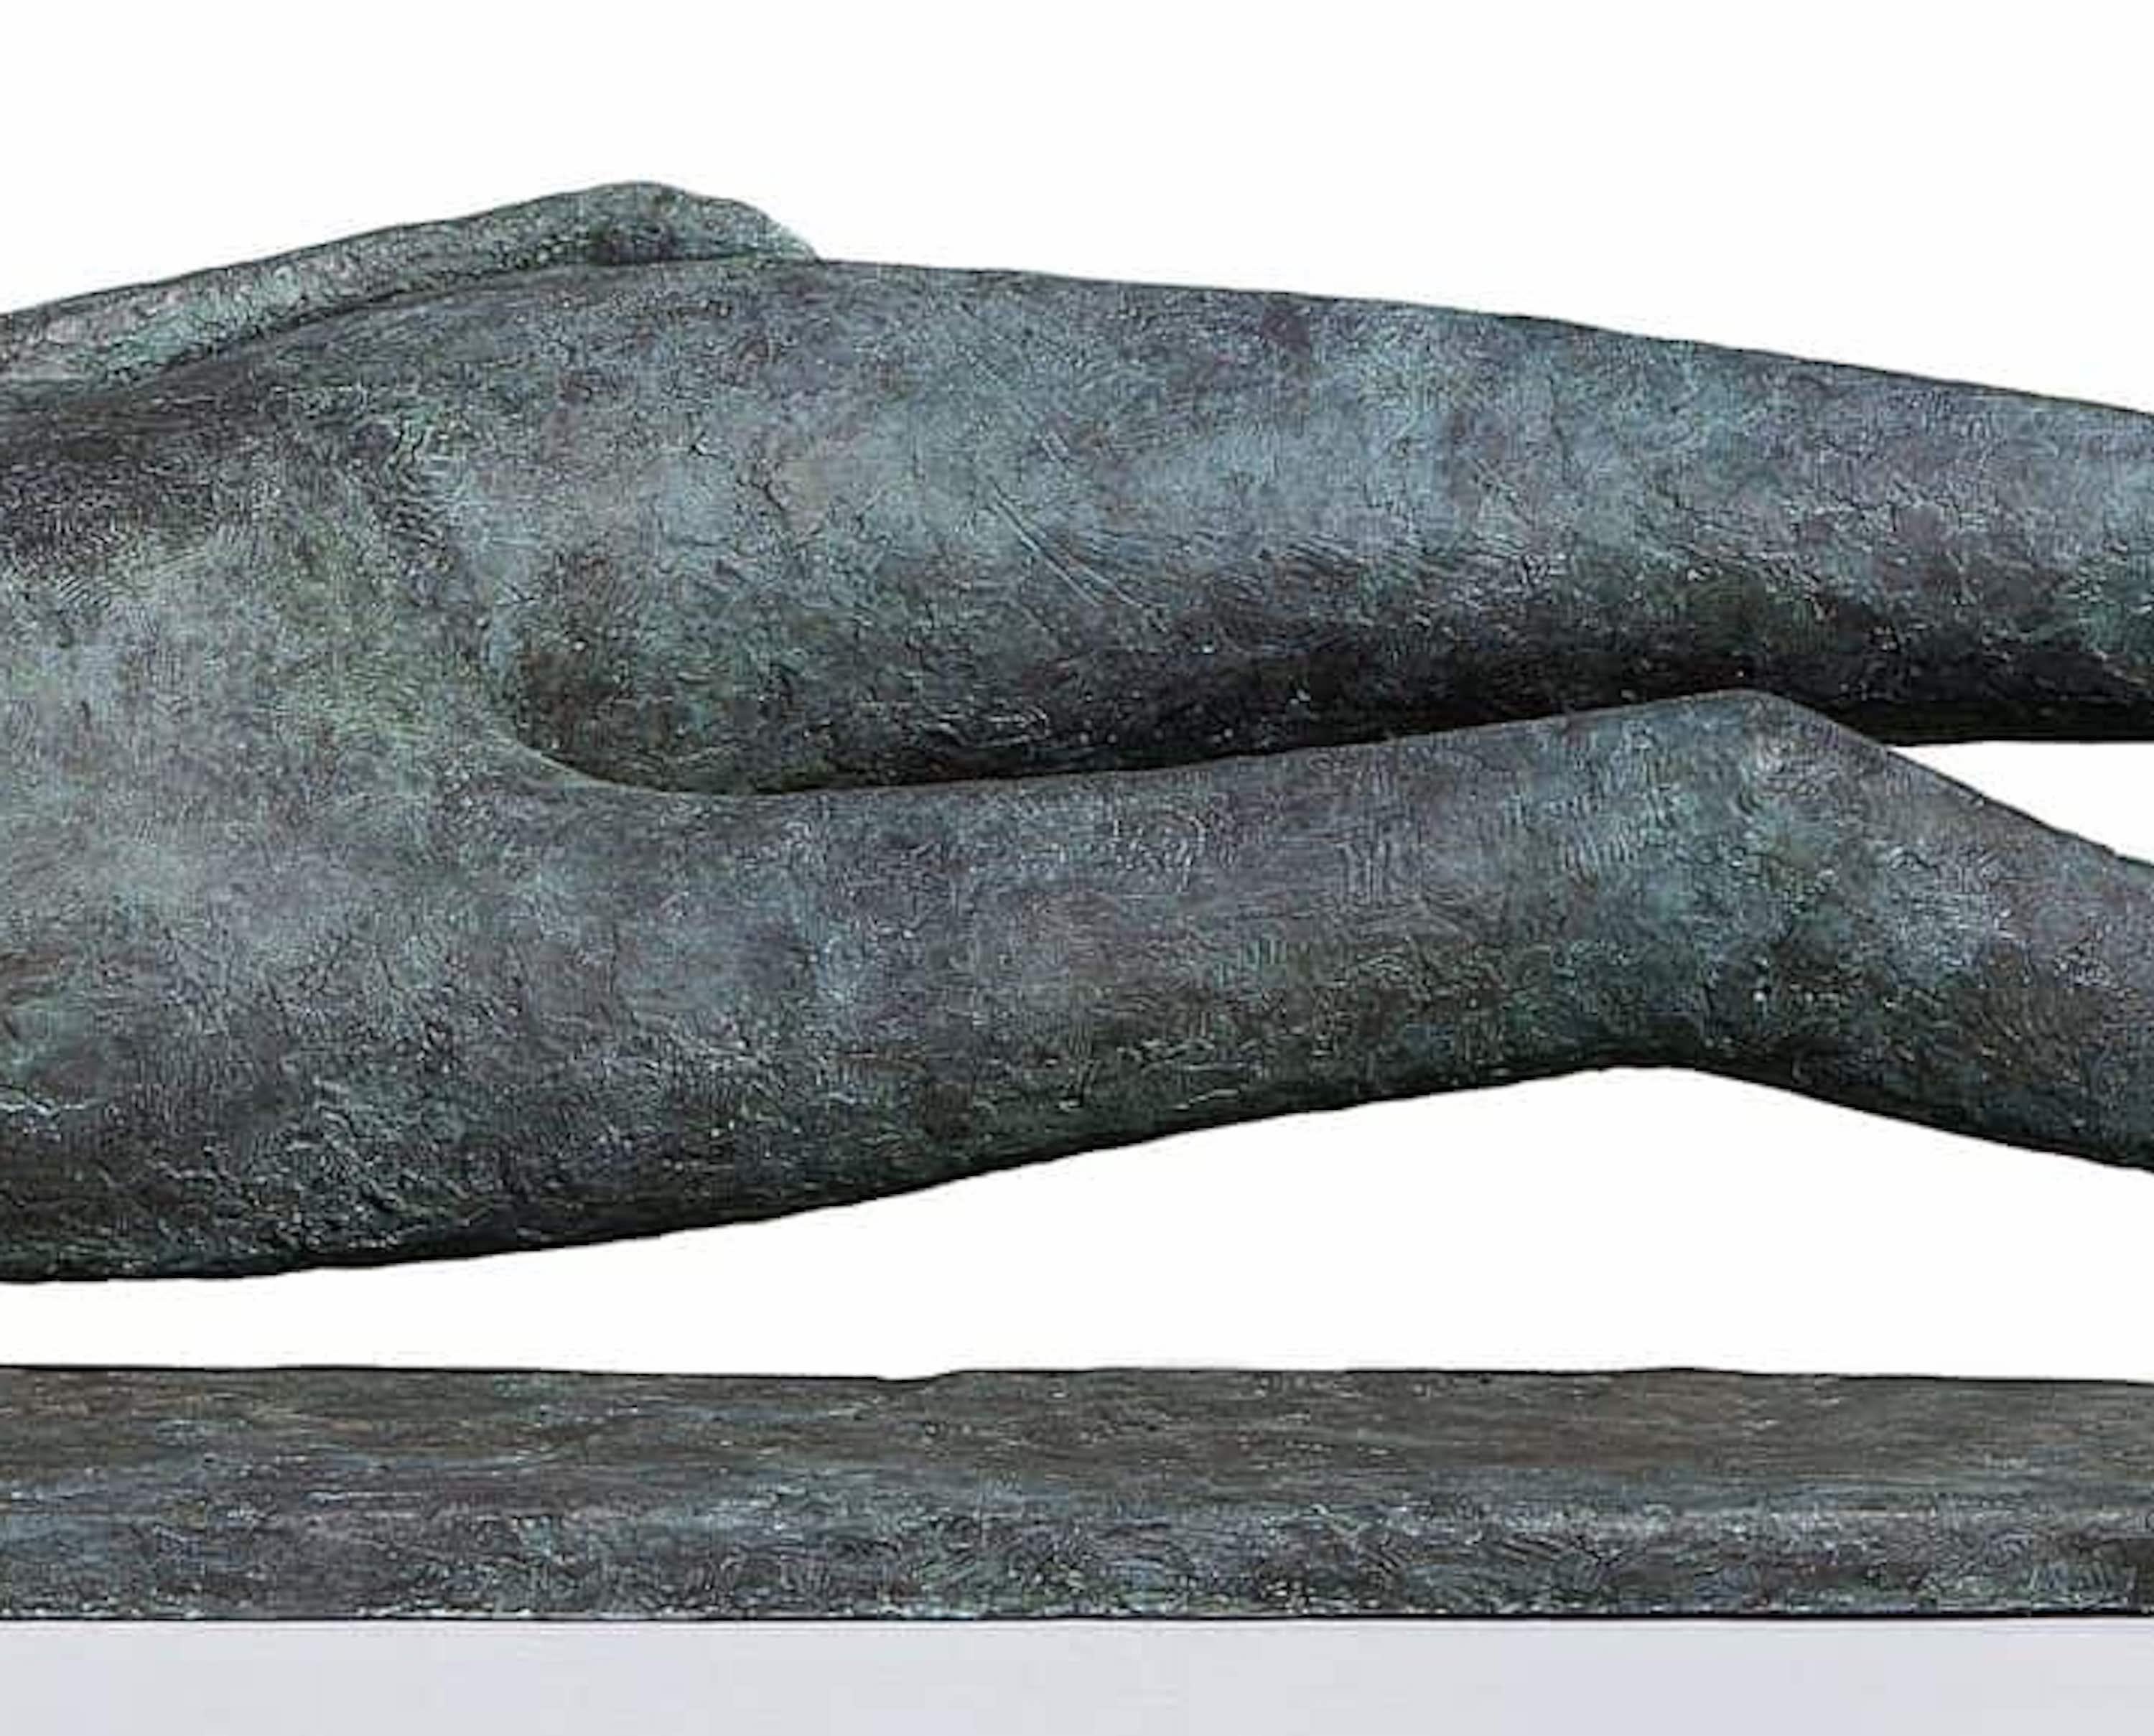 Monumental Lying Figure by Pierre Yermia - Large bronze sculpture, nude torso 3